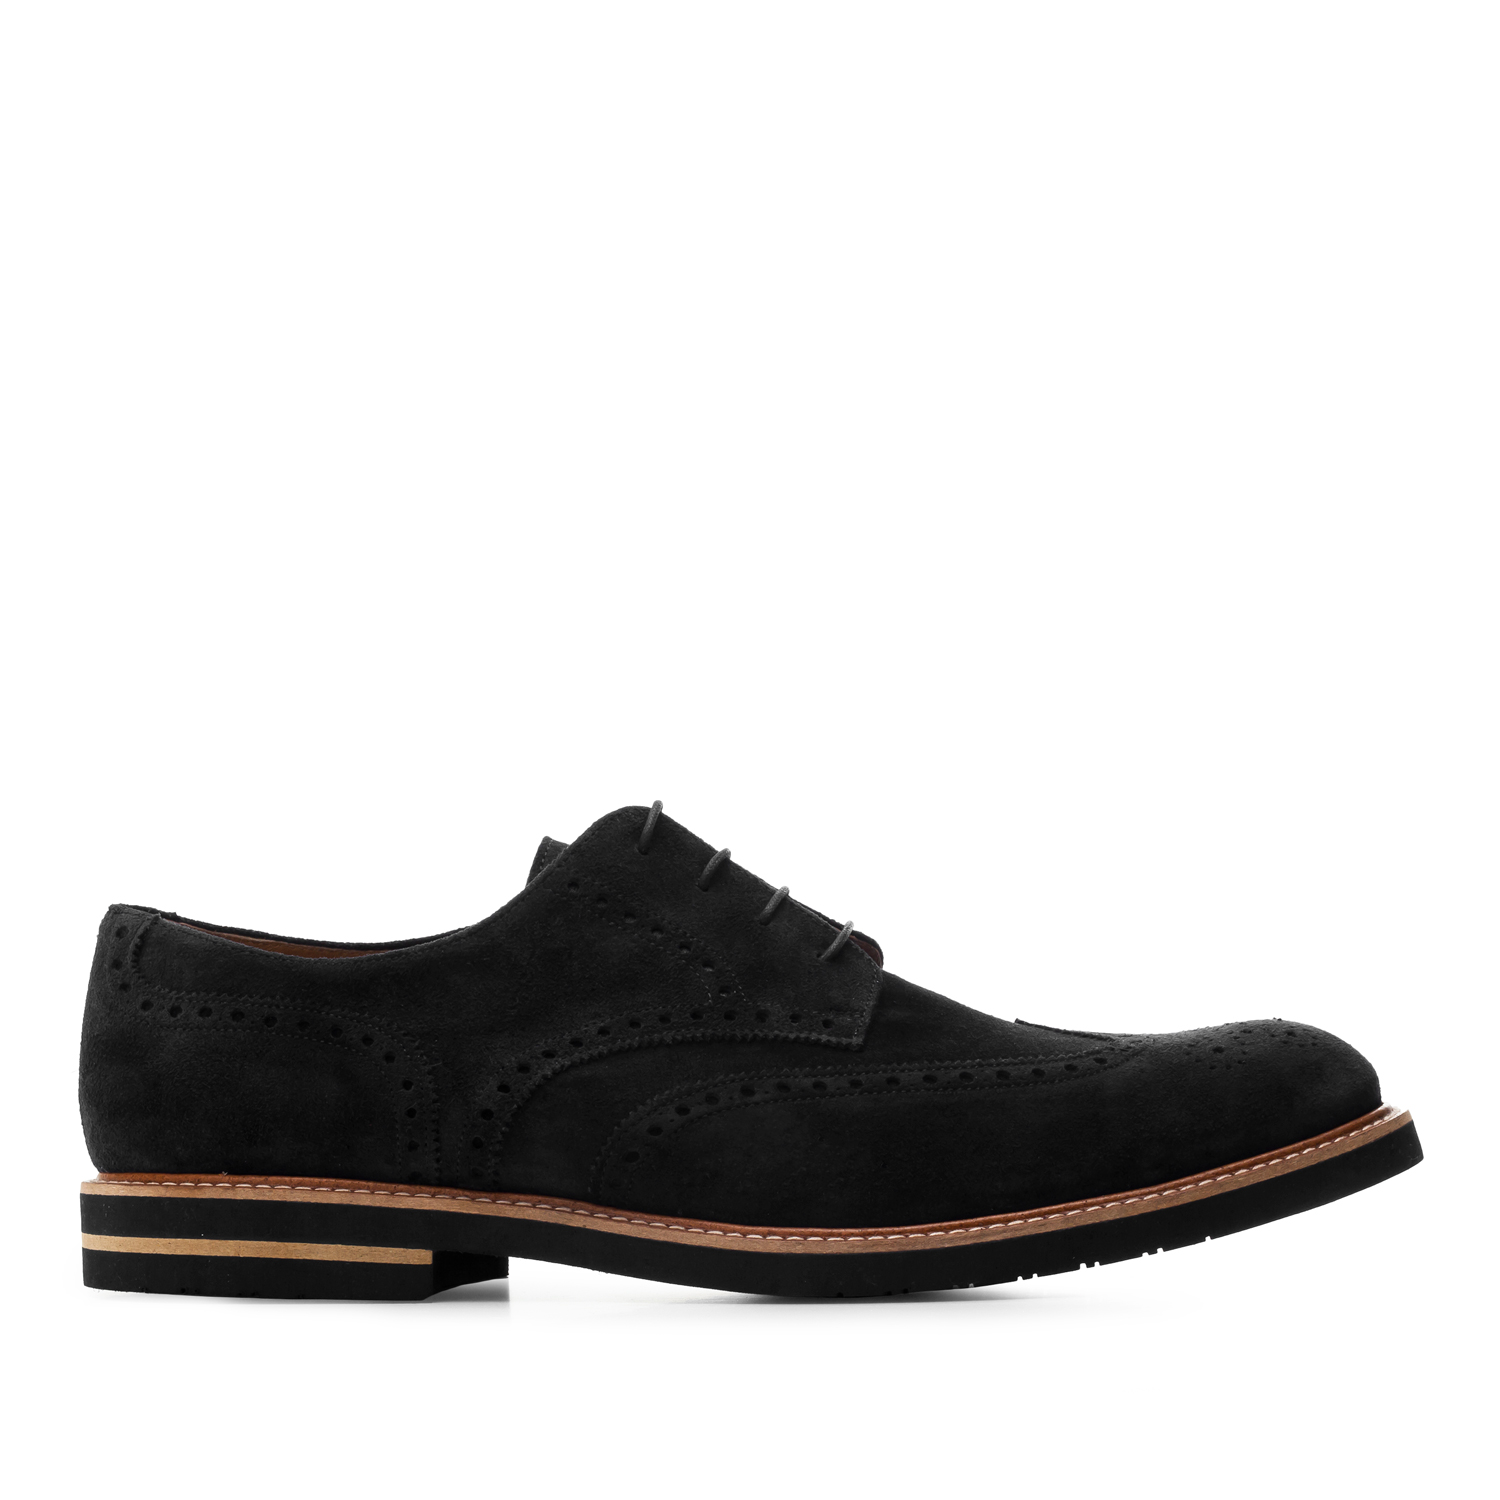 Chaussures Style Oxford cuir suéde Noir 